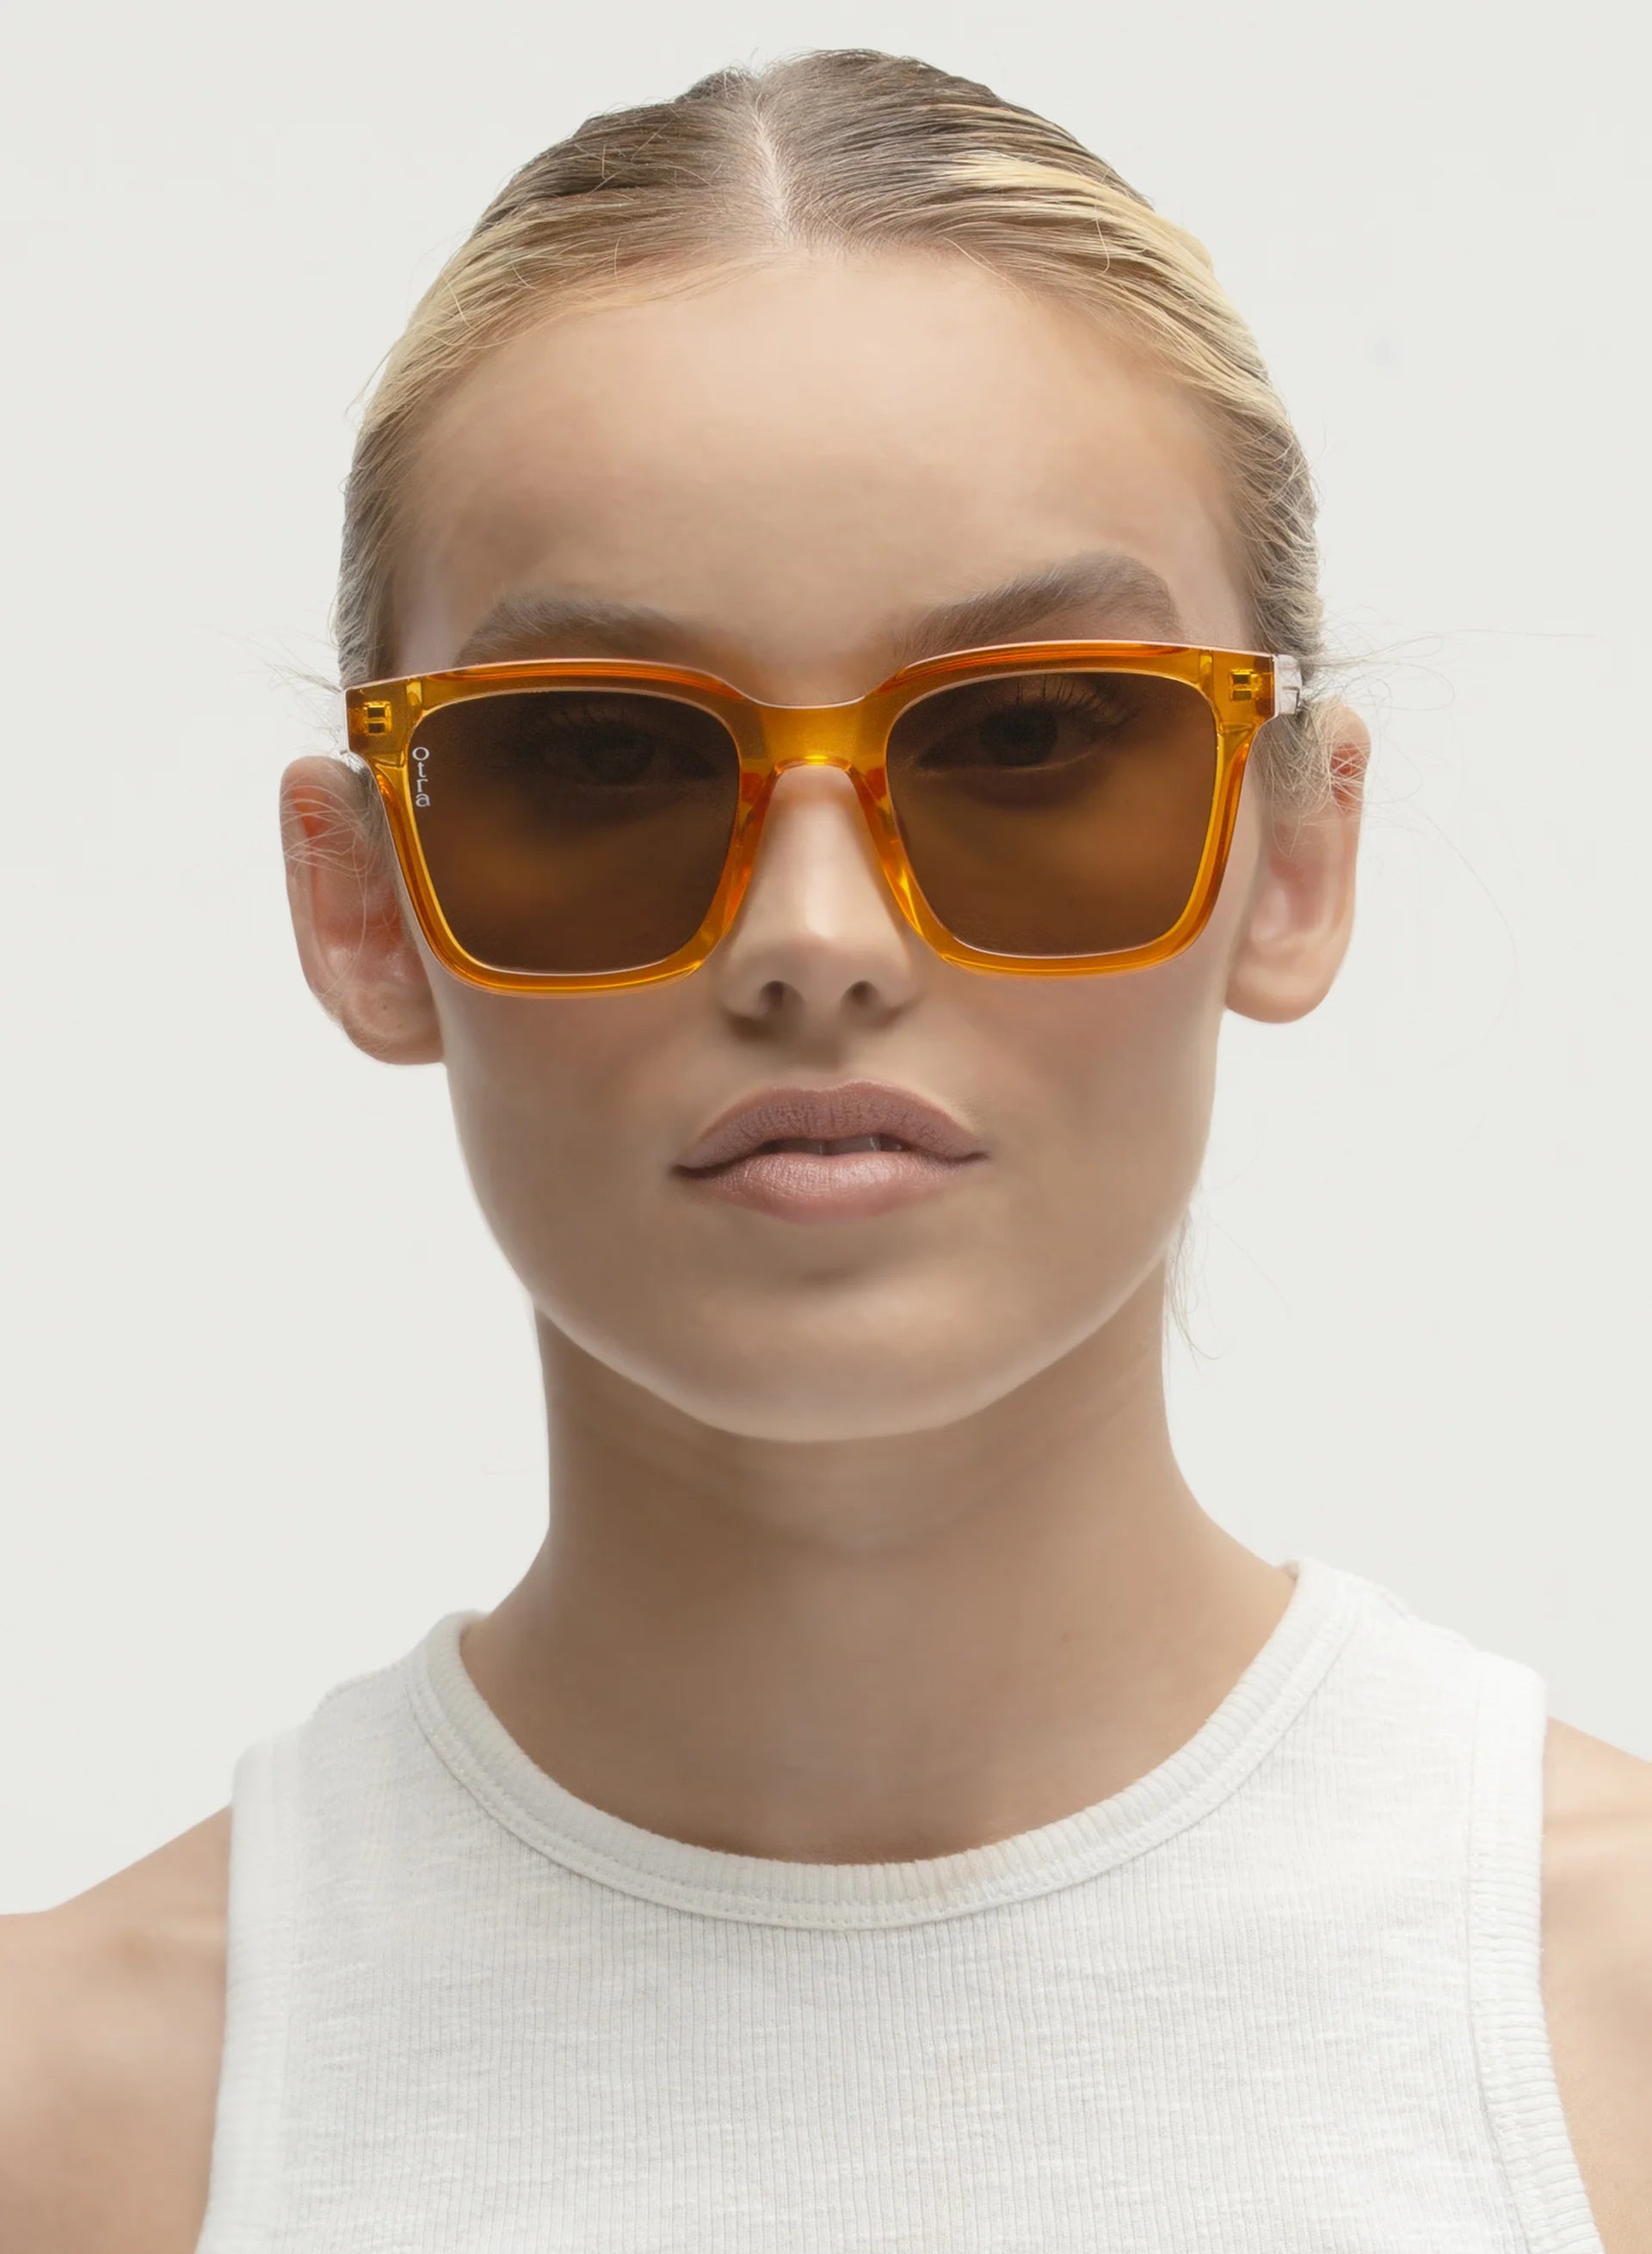 Fyn Sunglasses Orange Brown Fade